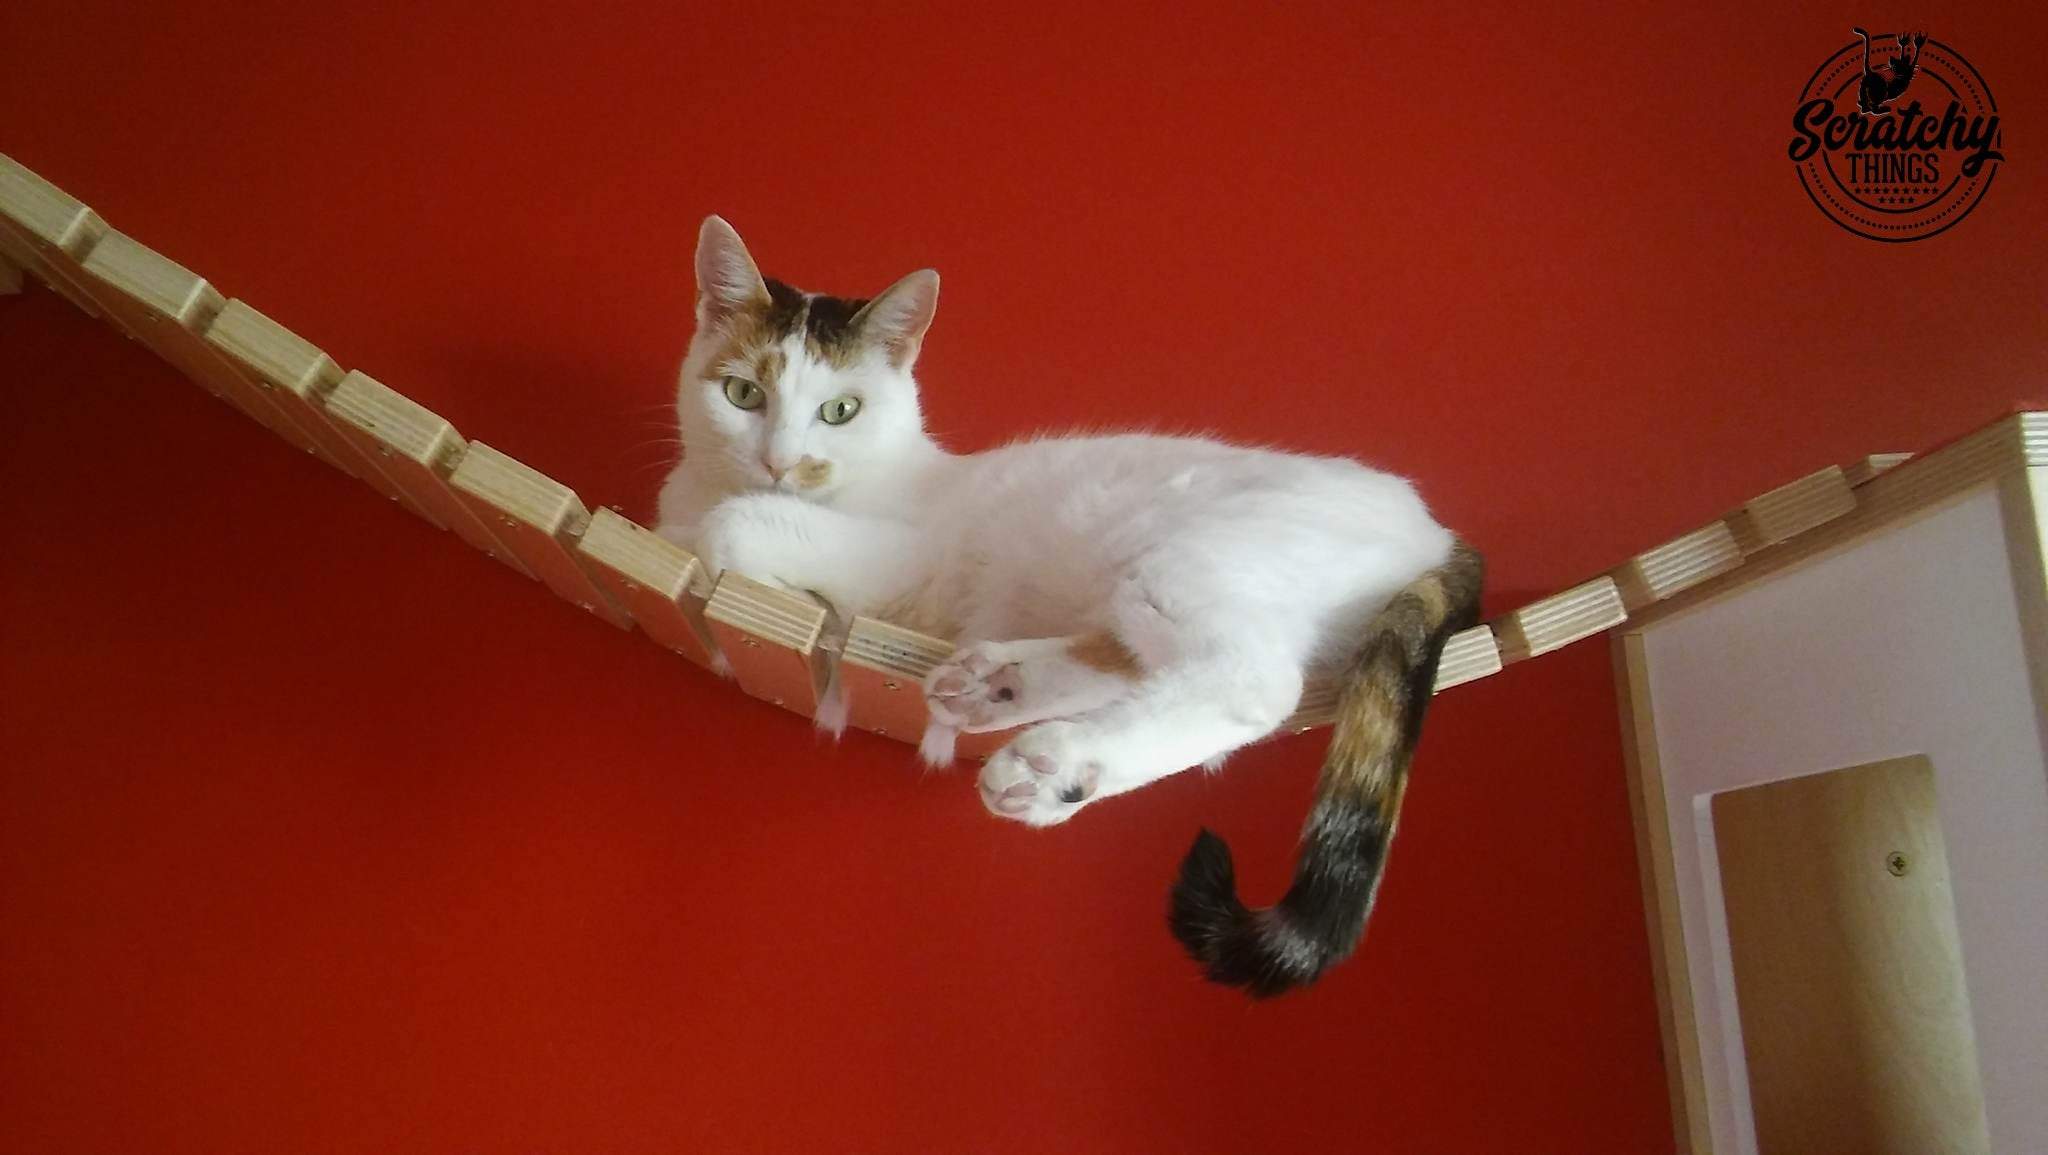 Cat Wall Bridge Shelf Step - Wally Bridge (Solo - 1-Step mount) - Scratchy Things Premium Pet Furniture